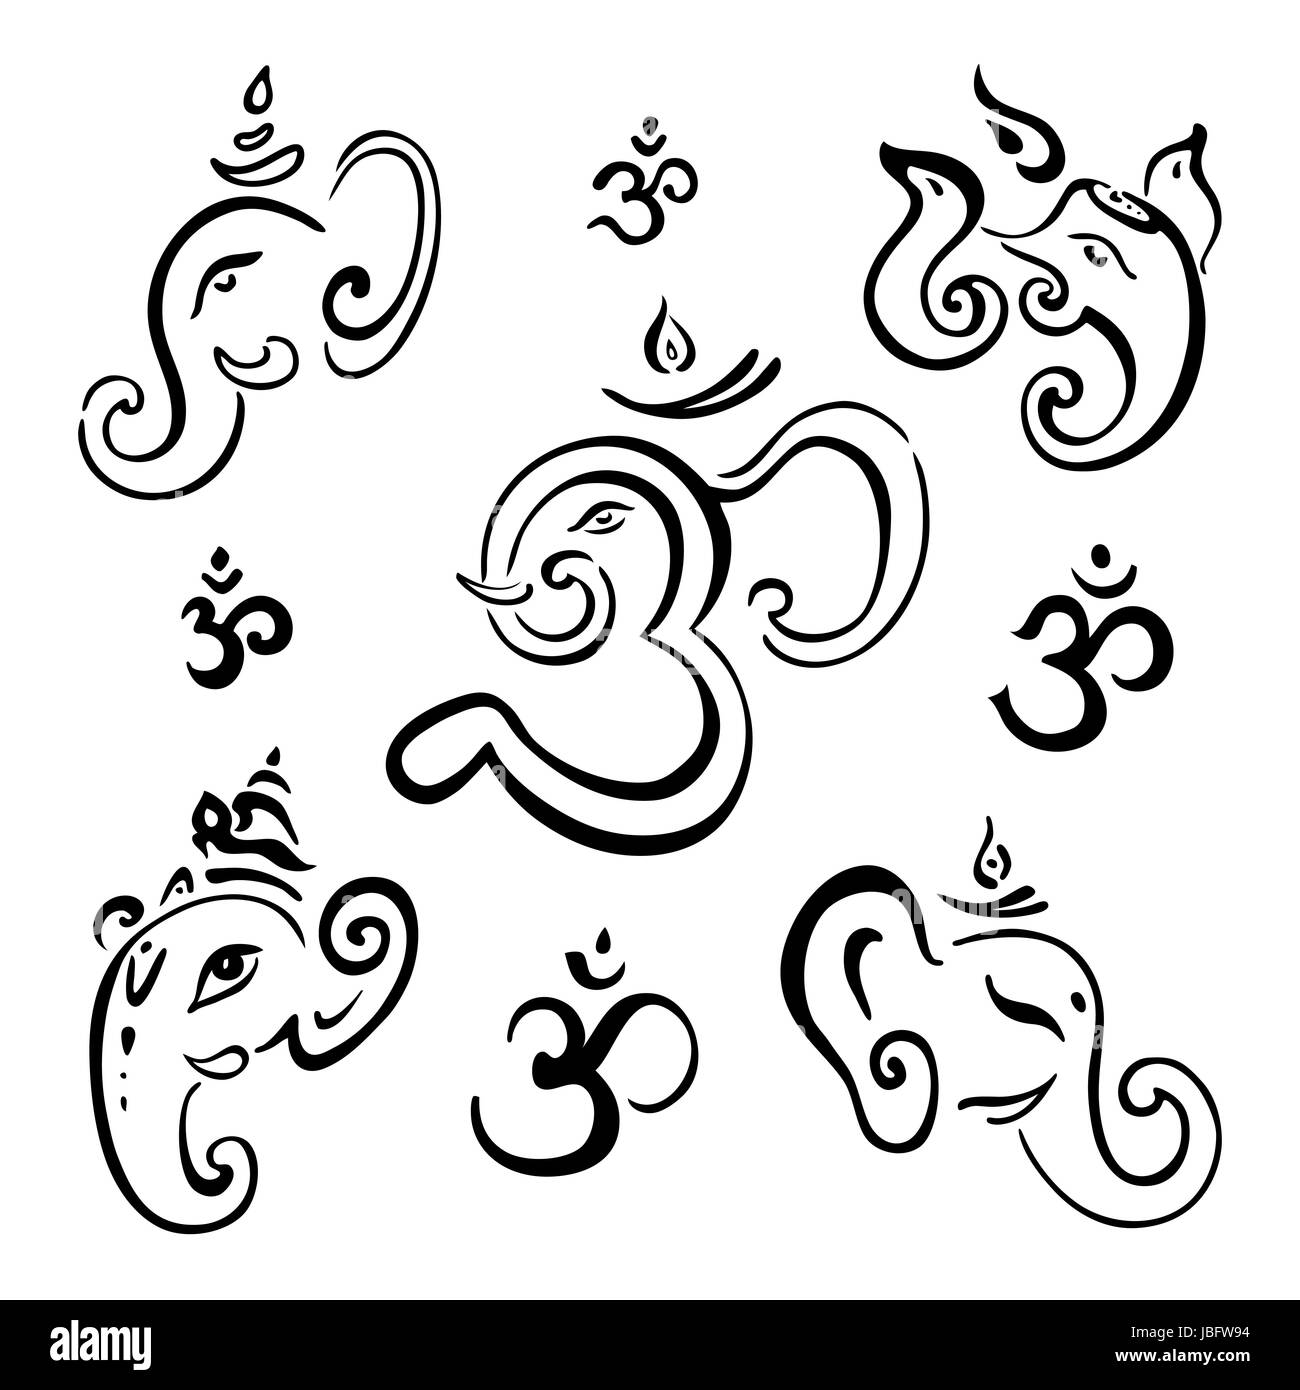 Hindu God Ganesha. Vector hand drawn illustration set. Stock Photo